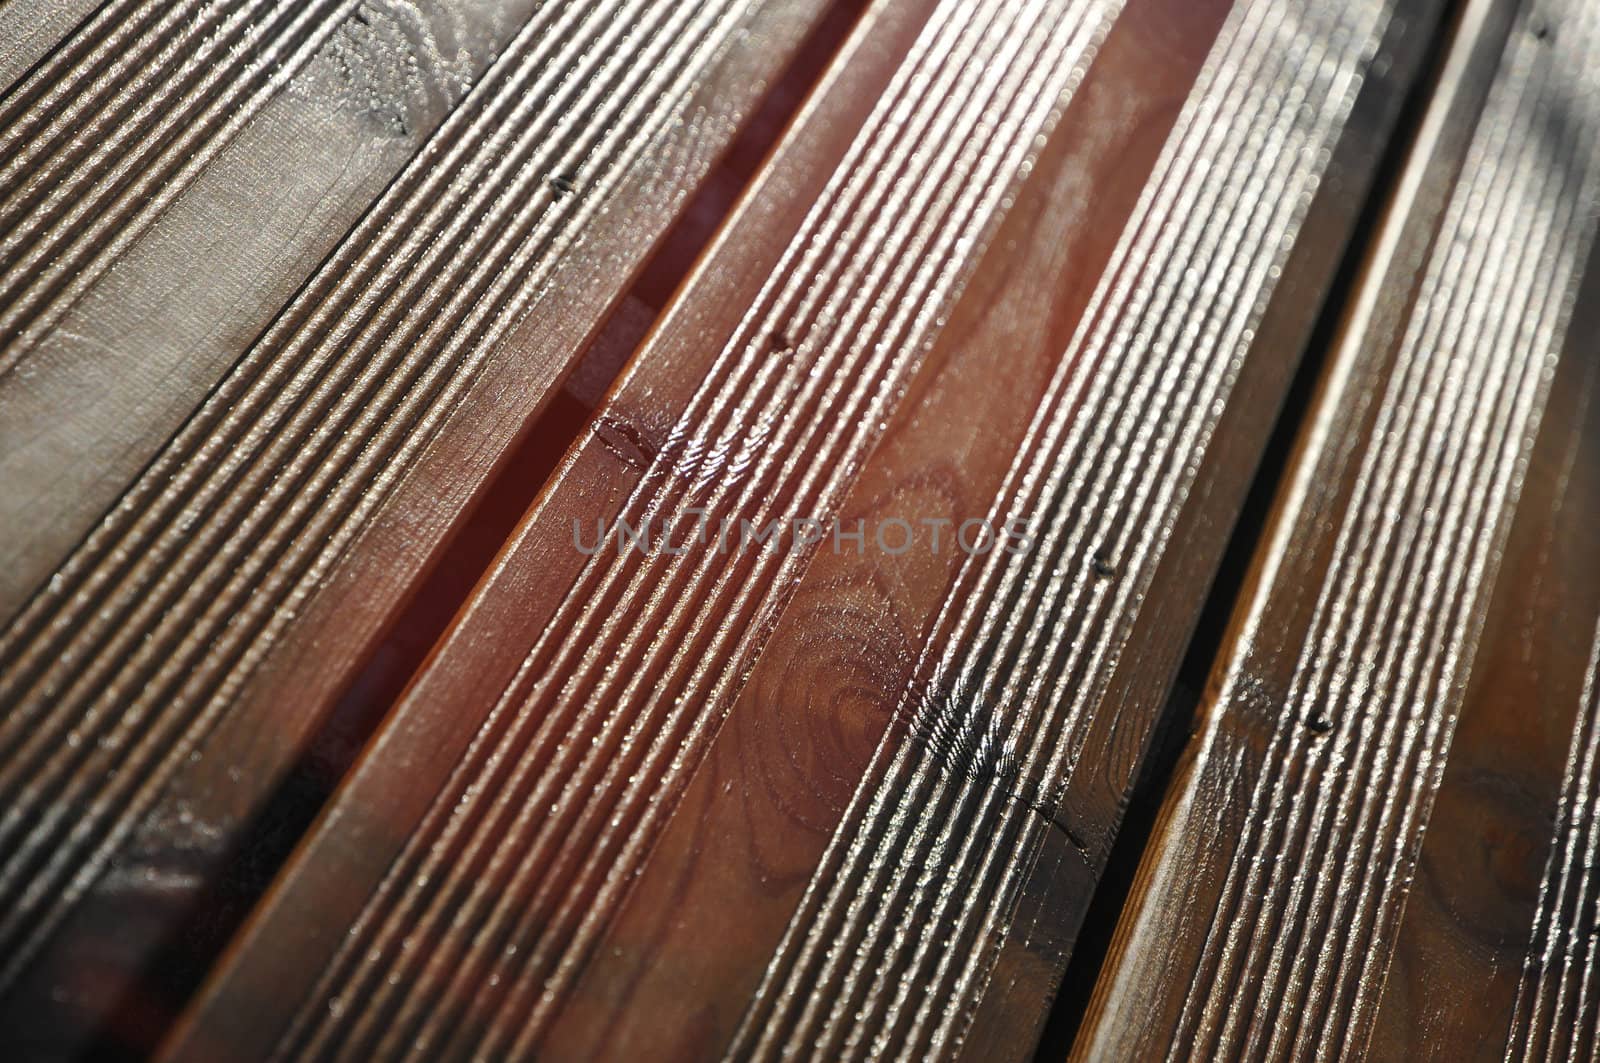 Wood Floor very Wet and Shiny